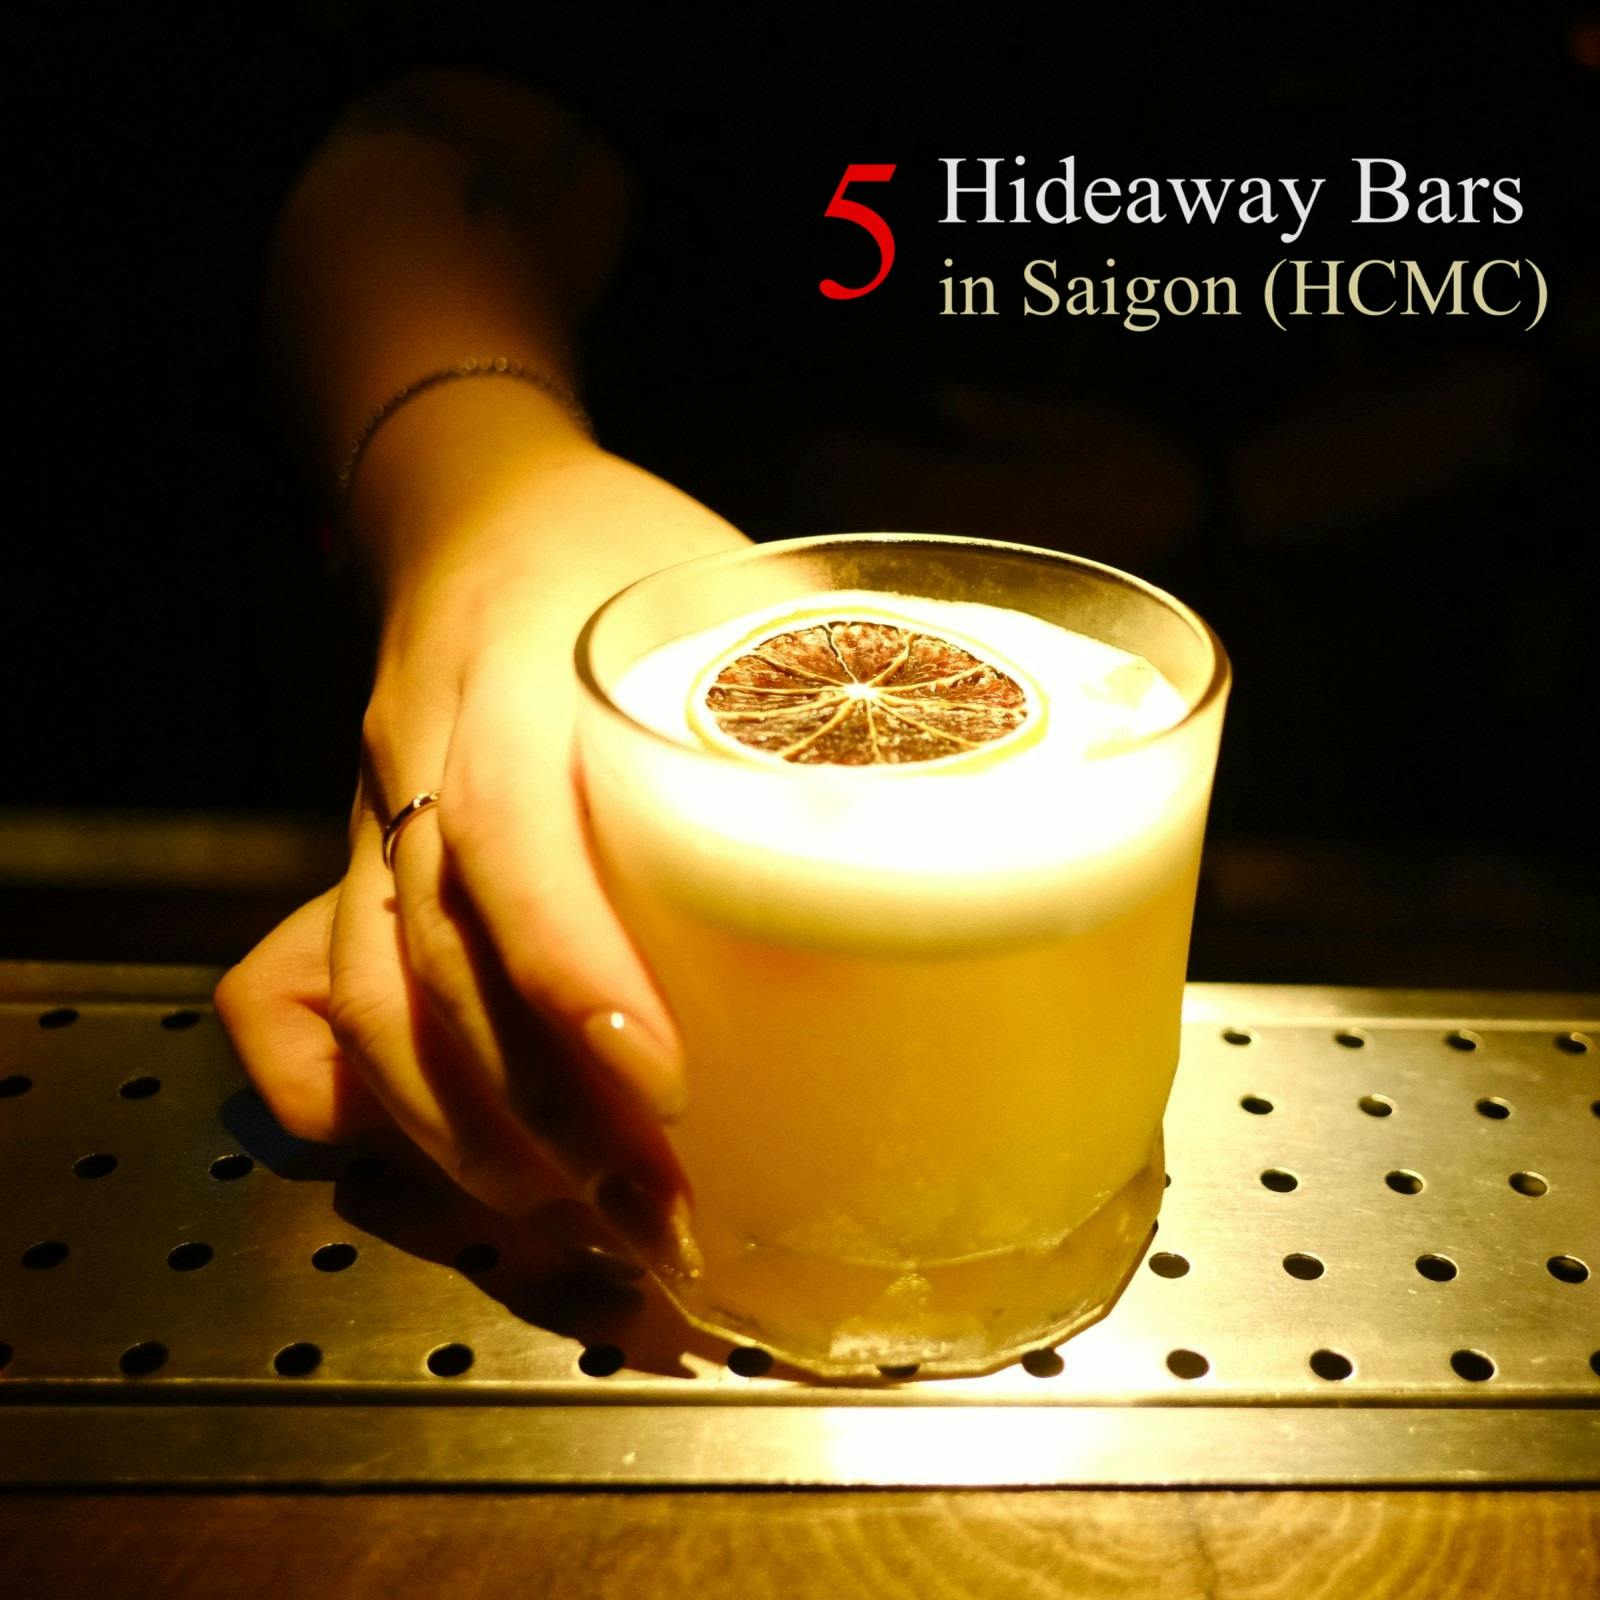 5 Hideaway Bars in Saigon (Ho Chi Minh City), Vietnam